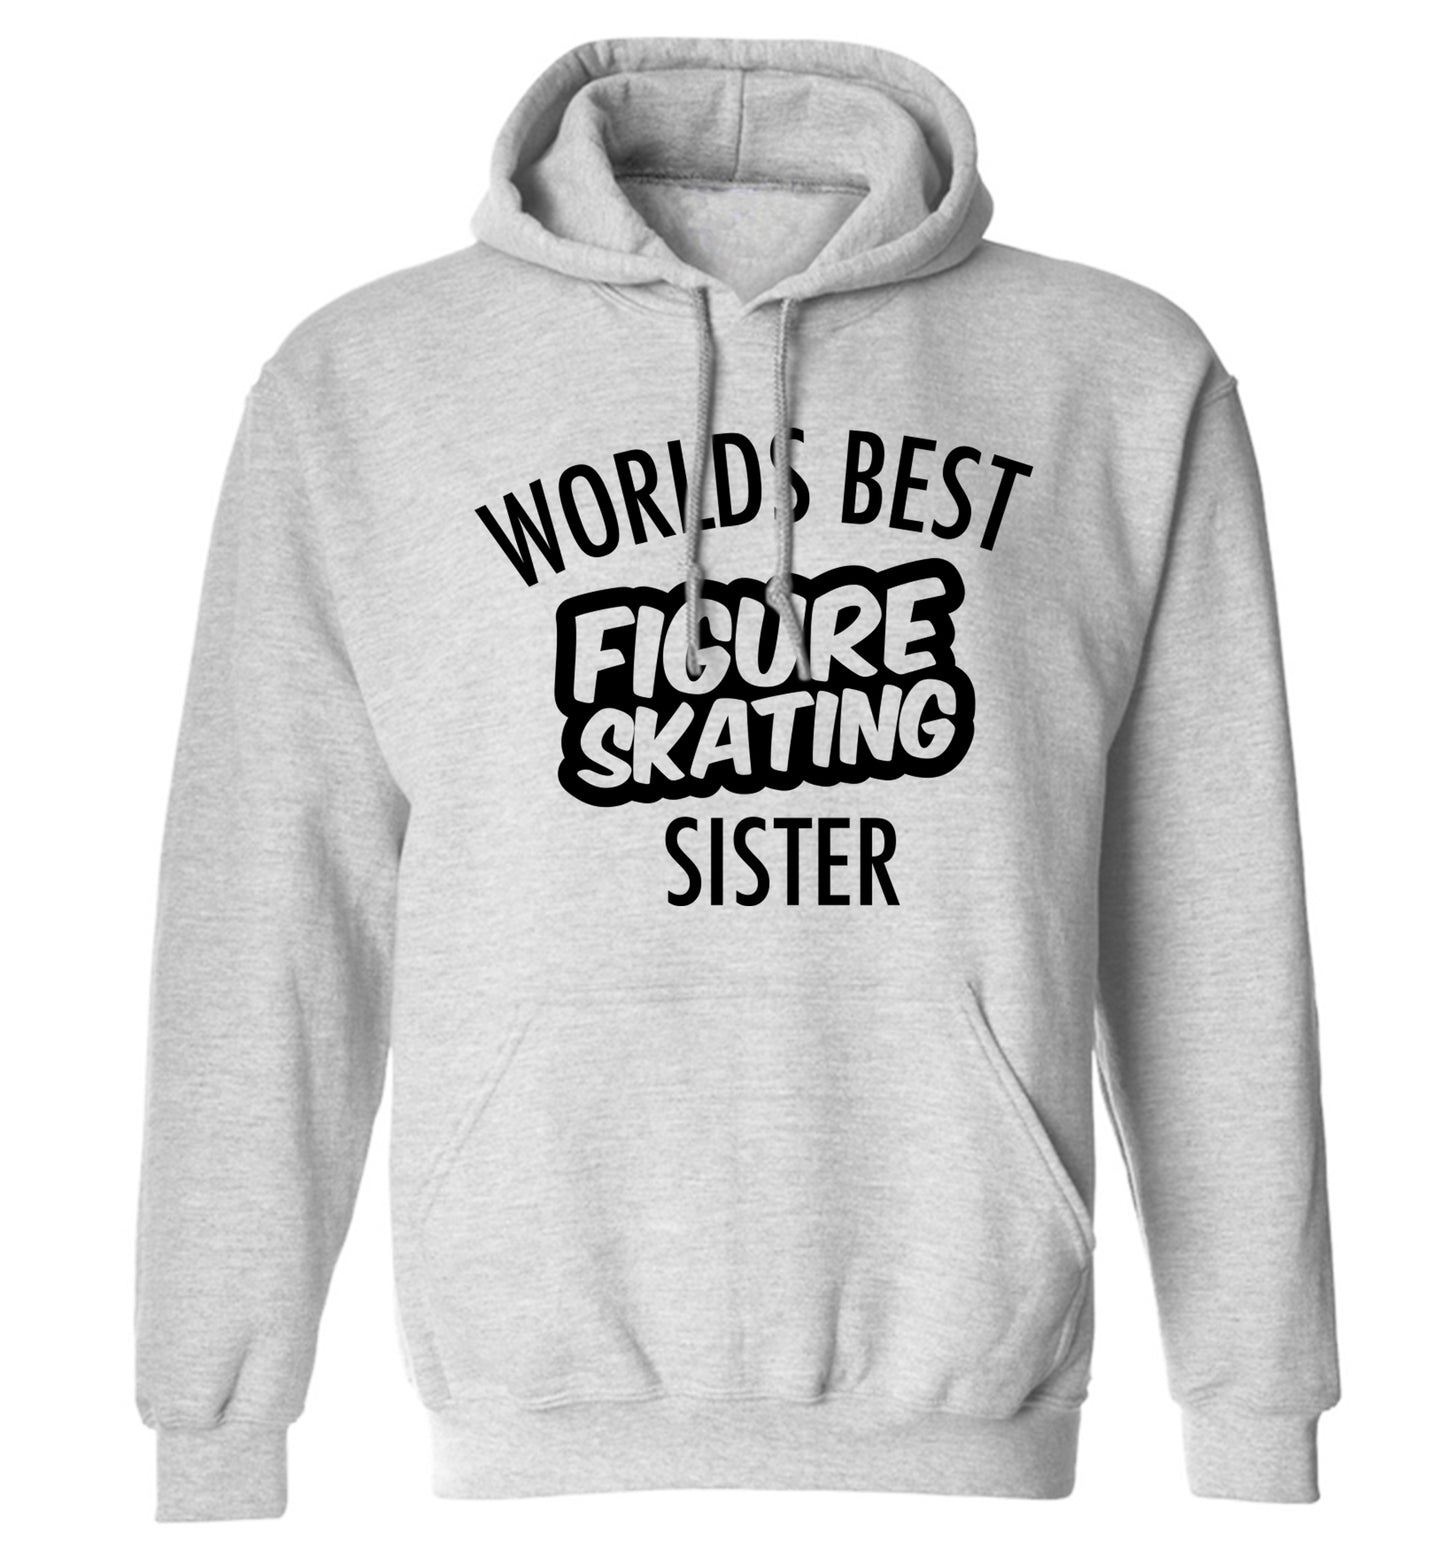 Worlds best figure skating sisteradults unisexgrey hoodie 2XL